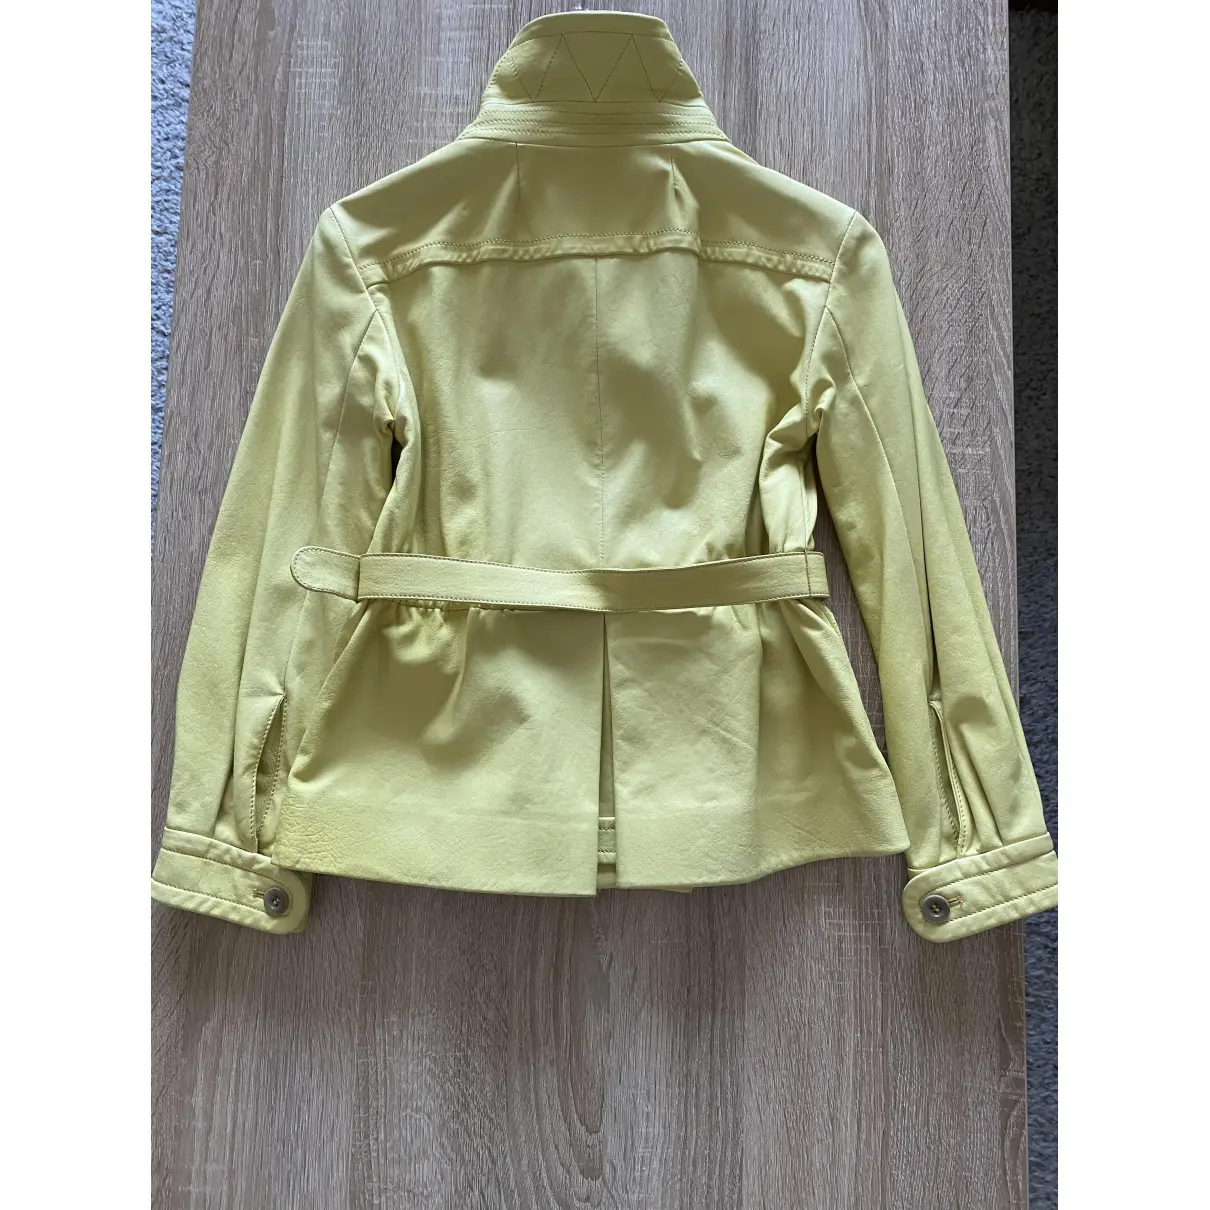 Buy Miu Miu Leather jacket online